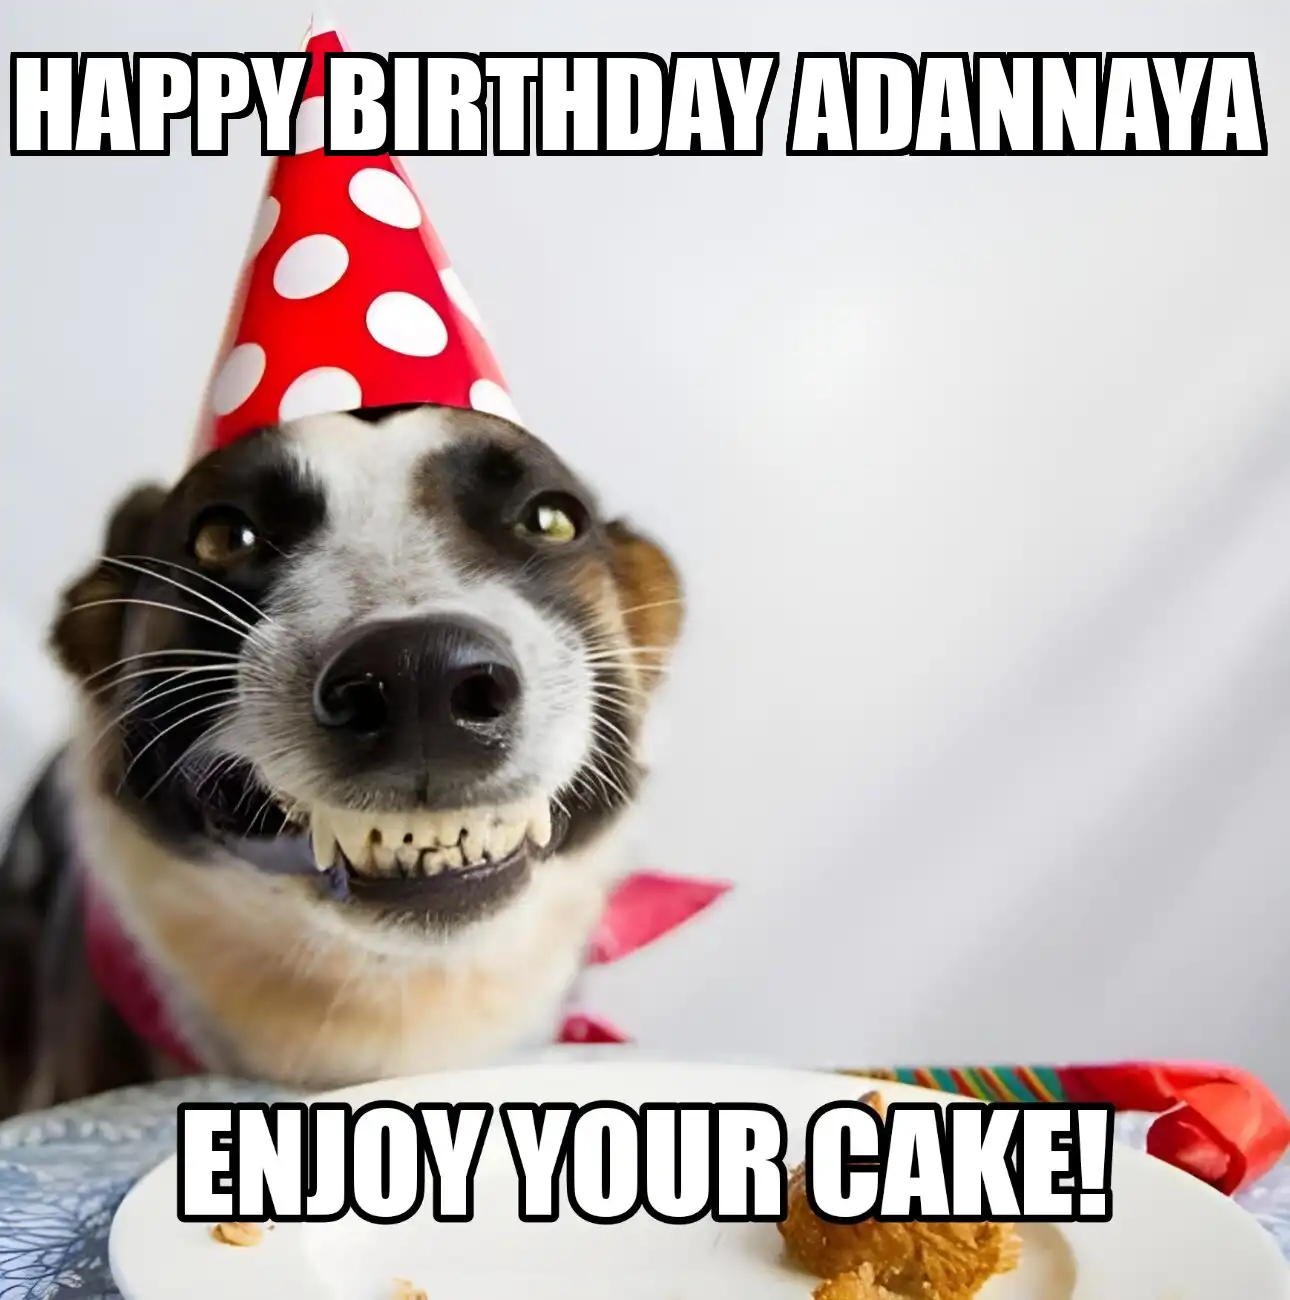 Happy Birthday Adannaya Enjoy Your Cake Dog Meme